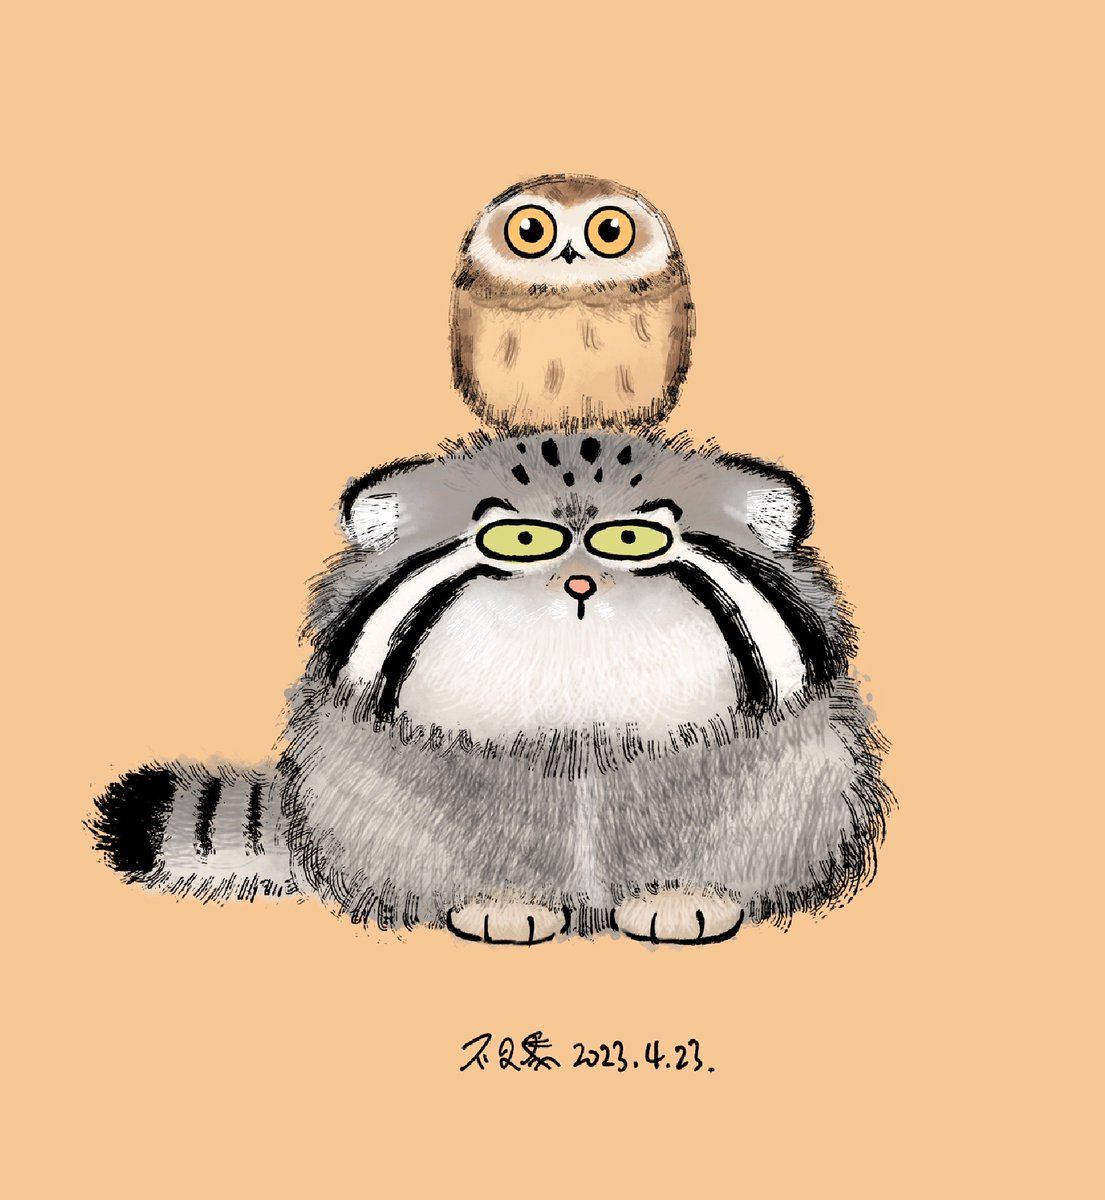 4/23 International Pallas's Cat Day
There is an 'Athene noctua(Little Owl)' on the head.

4/23 国際マヌルネコの日

#不二馬大叔 #Bu2ma #兔猻 #縱紋腹小鴞 #國際兔猻日 #pallasscat #マヌルネコ #Athenenoctua #LittleOwl #cat #9gag #meme #catmemes #catart #illustration #digitalart